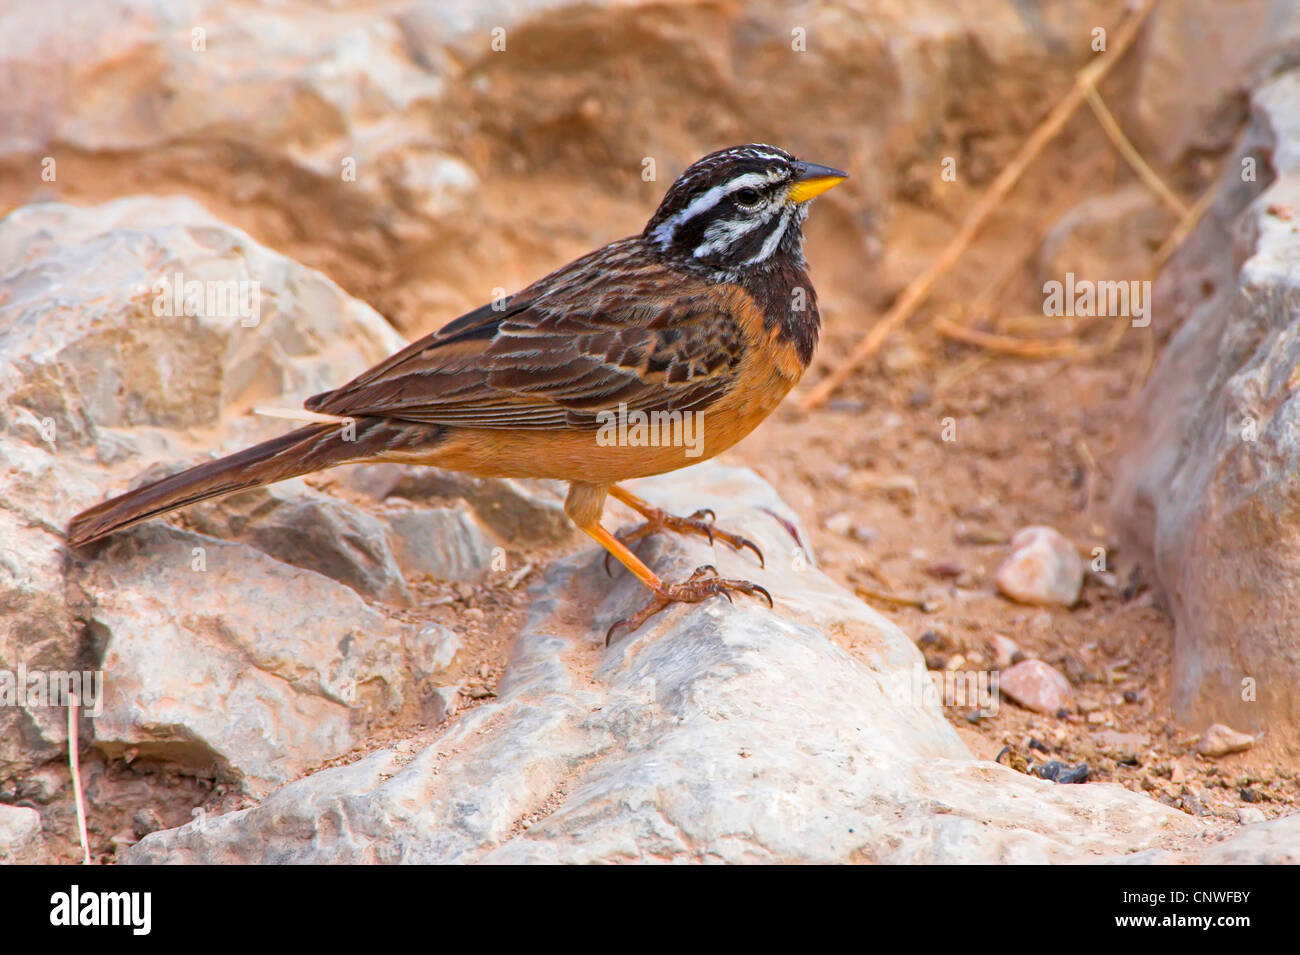 cinnamon-breasted rock bunting (Emberiza tahapisi), sitting on a rock, Oman Stock Photo